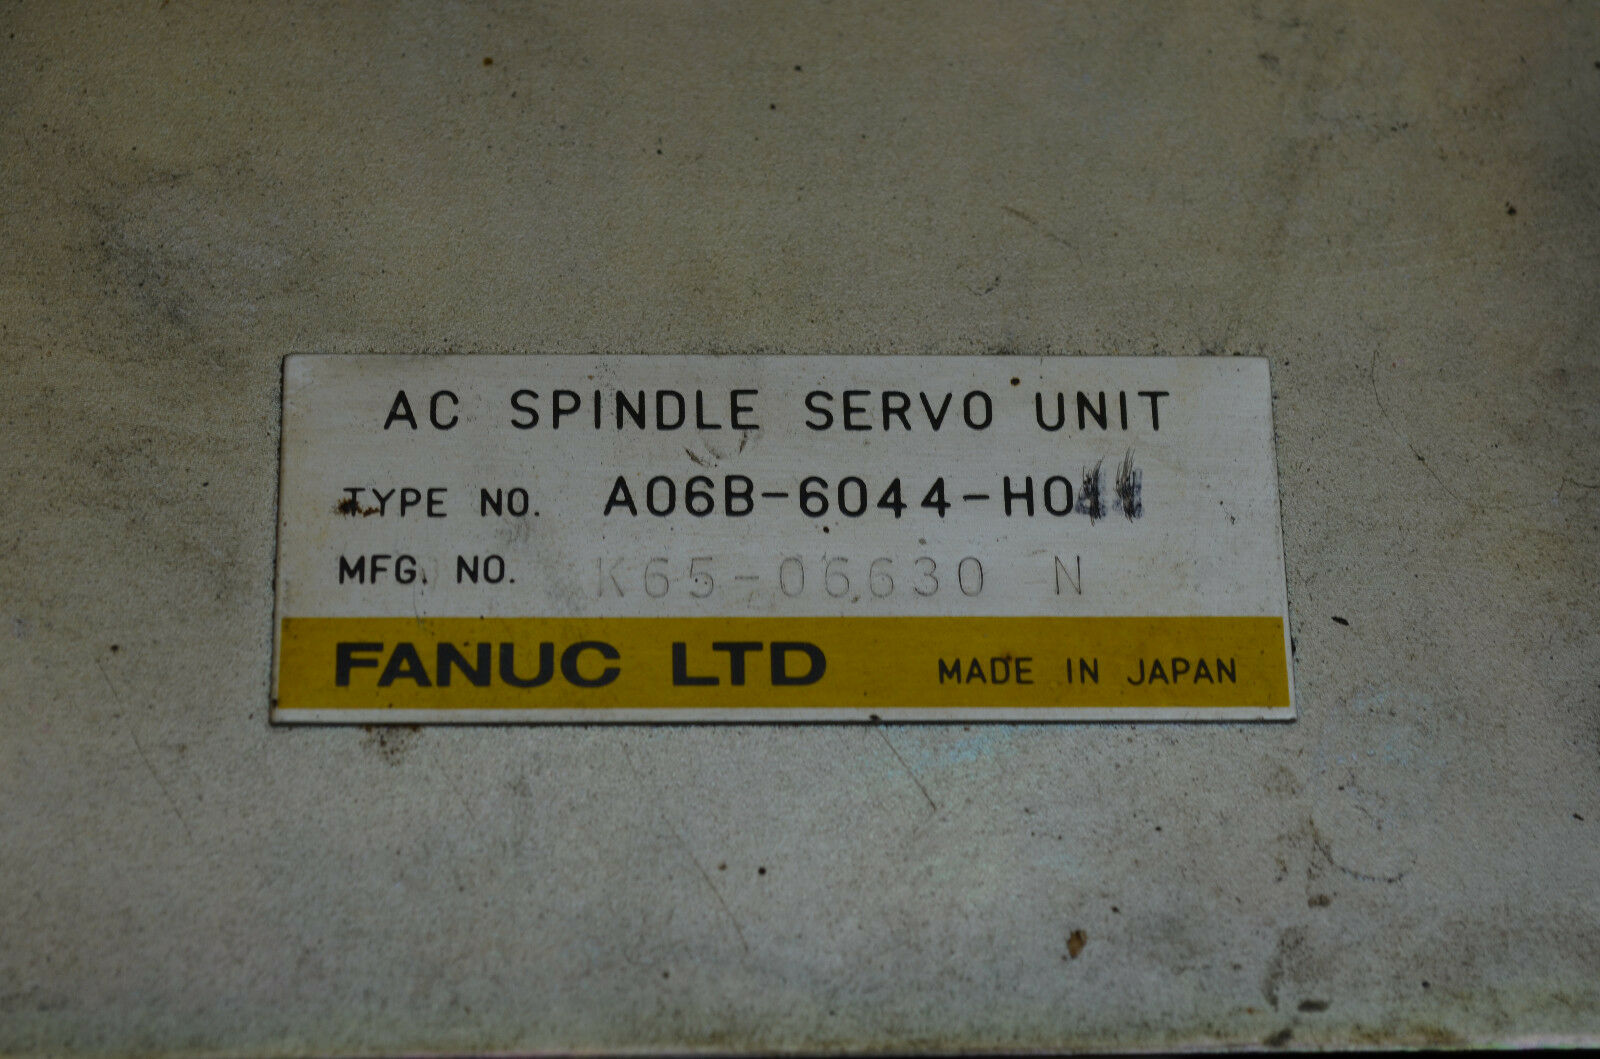 Fanuc AC spindle servo unit A06B-6044-H0